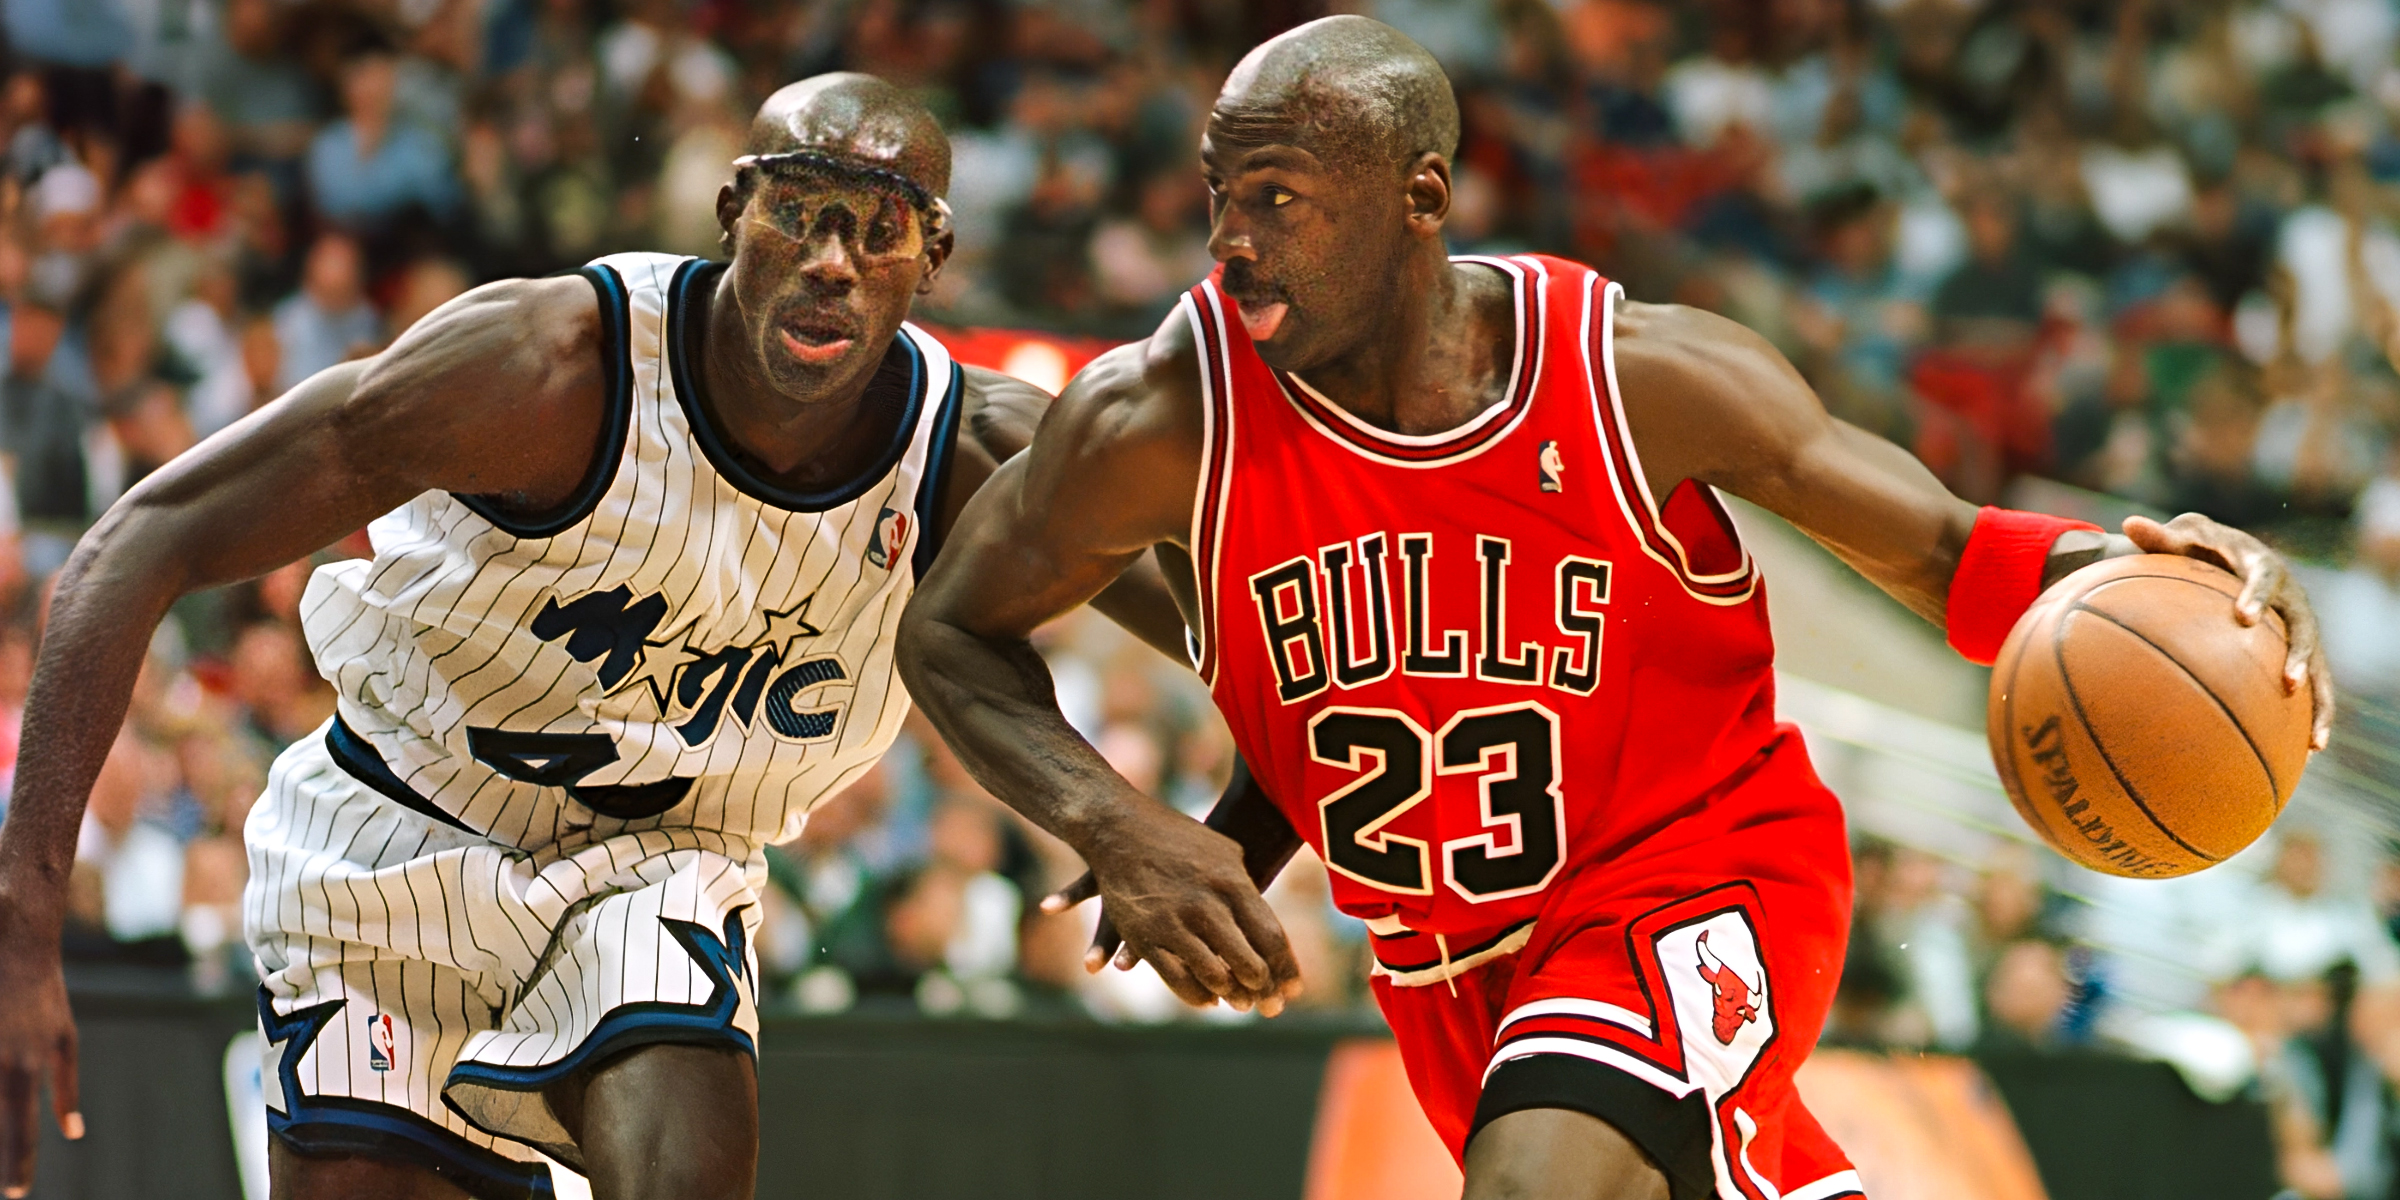 asketball sensation Michael Jordan | Source: Getty Images